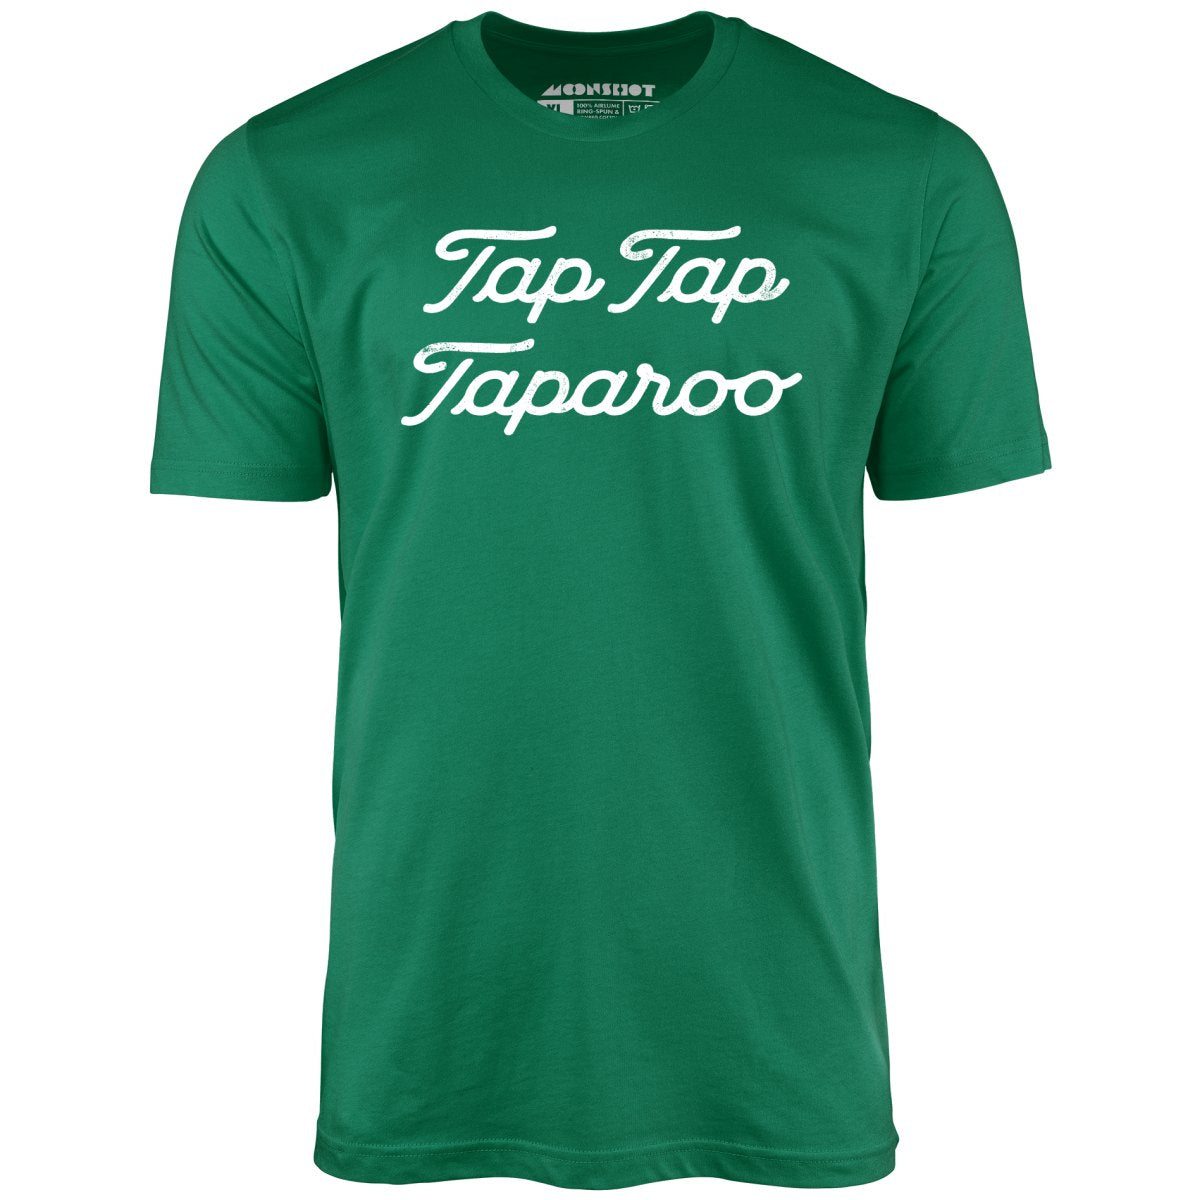 Tap Tap Taparoo Happy Gilmore - Unisex T-Shirt